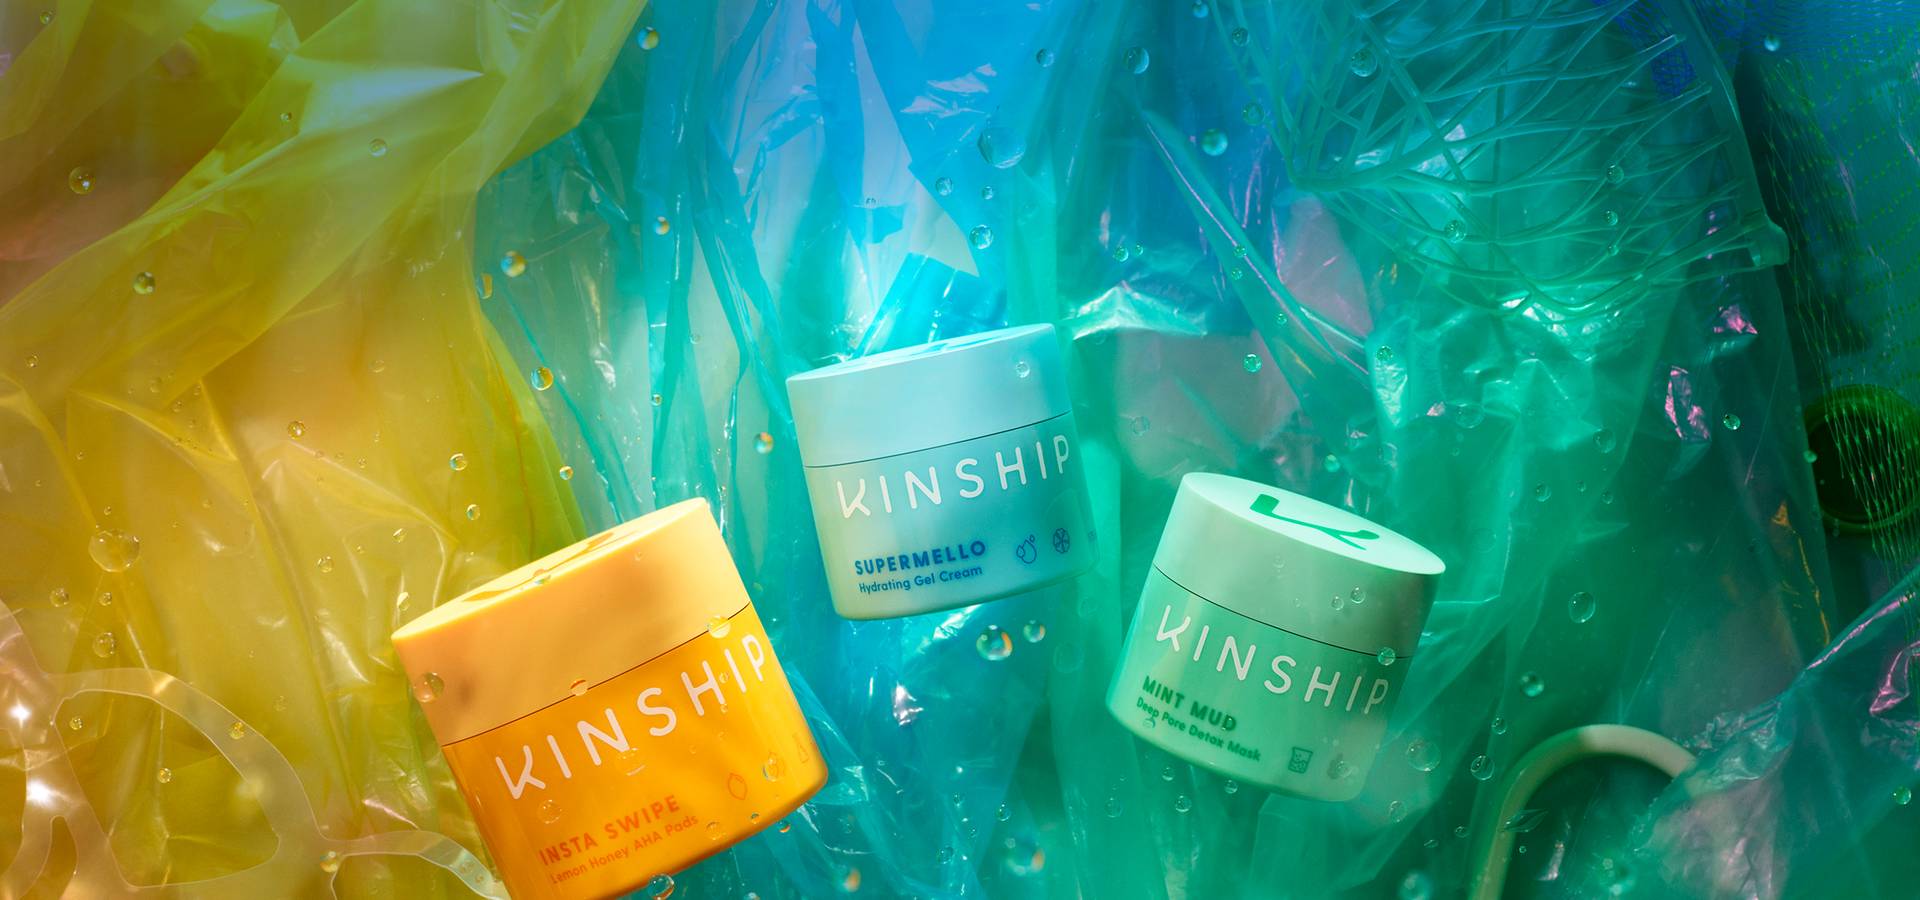 Kinship jars made from ocean waste plastic